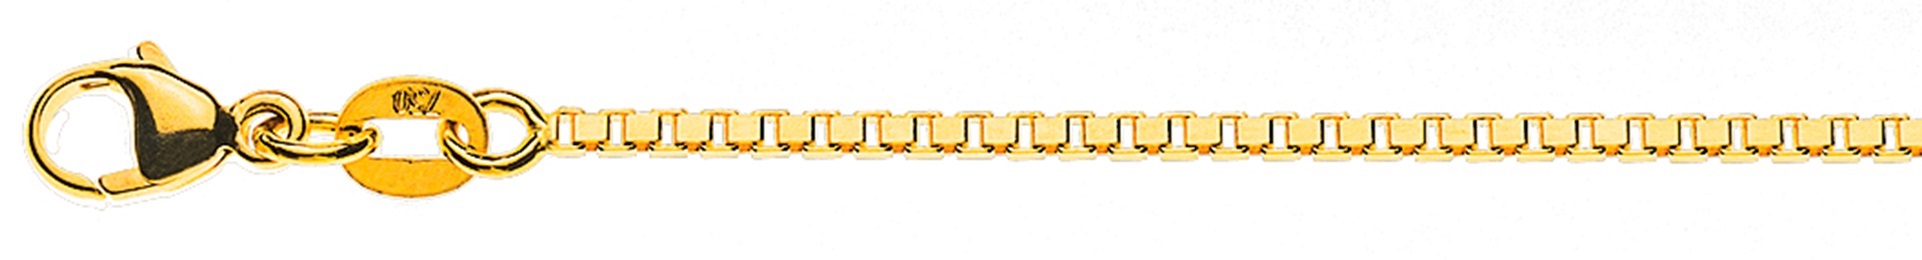 AURONOS Style Necklace yellow gold 9K Venetian chain diamond cut 55cm 1.4mm